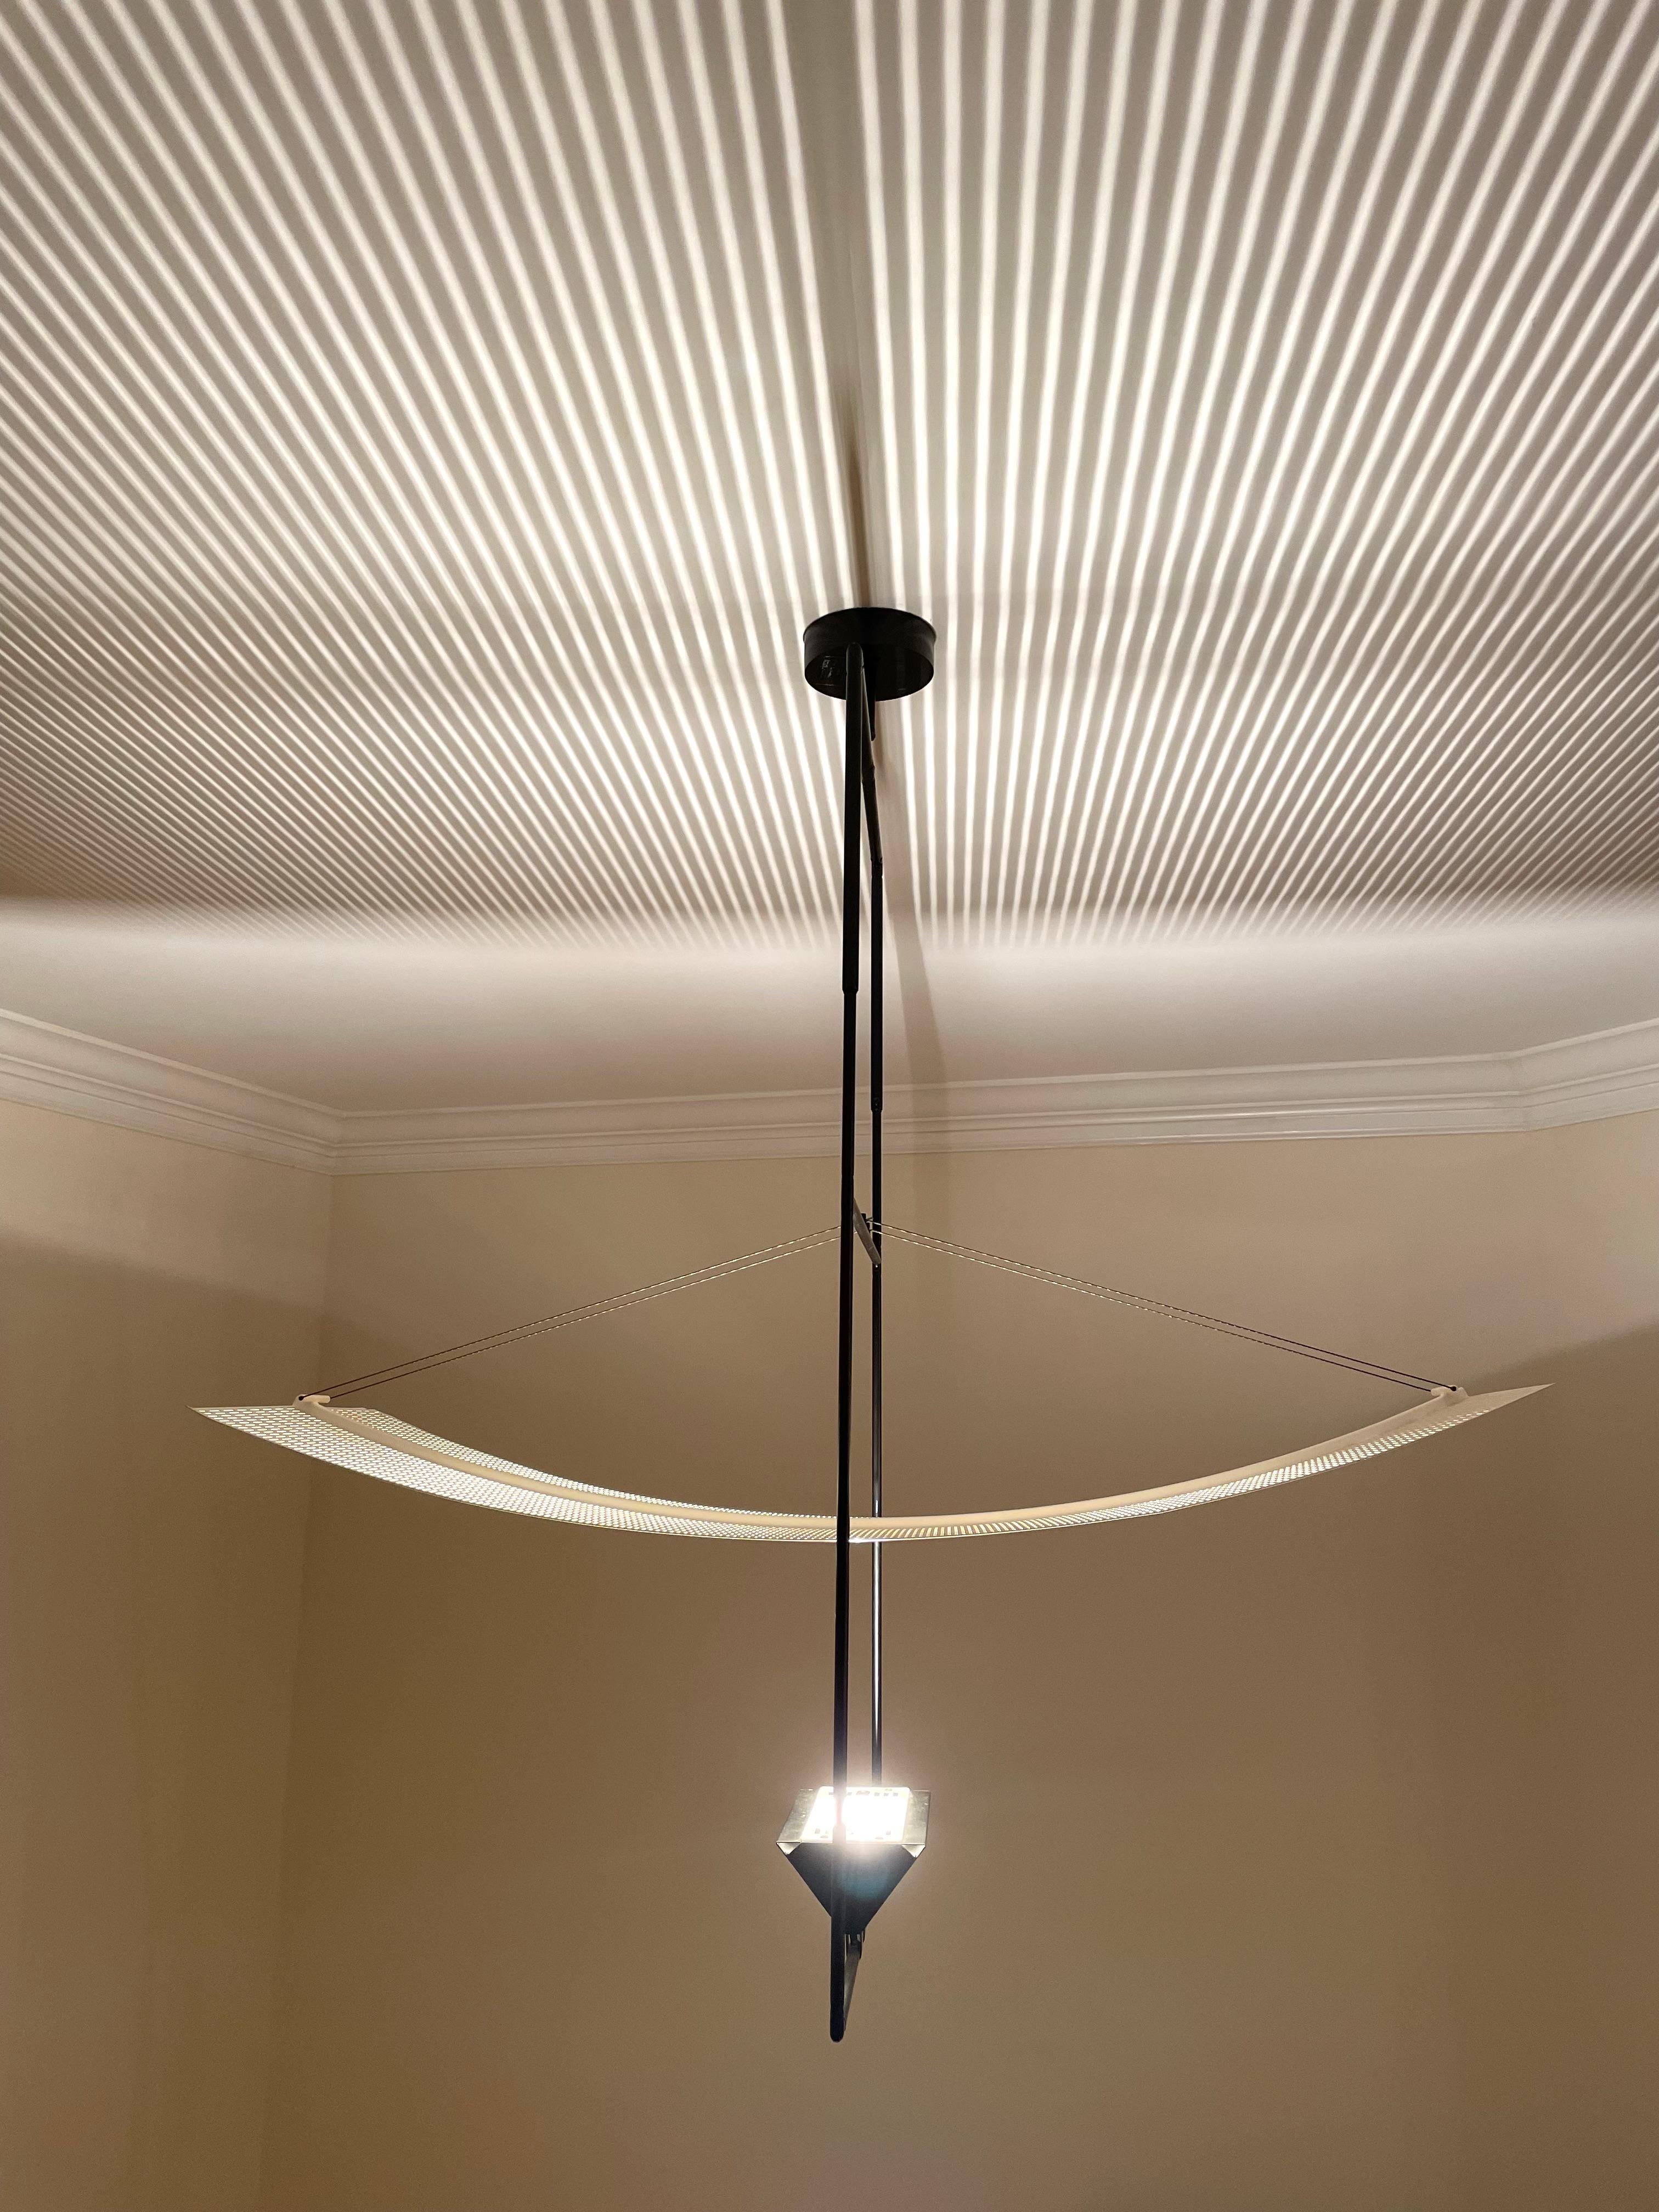 Zefiro Hanging lamp designed by Mario Botta for Artemide 4